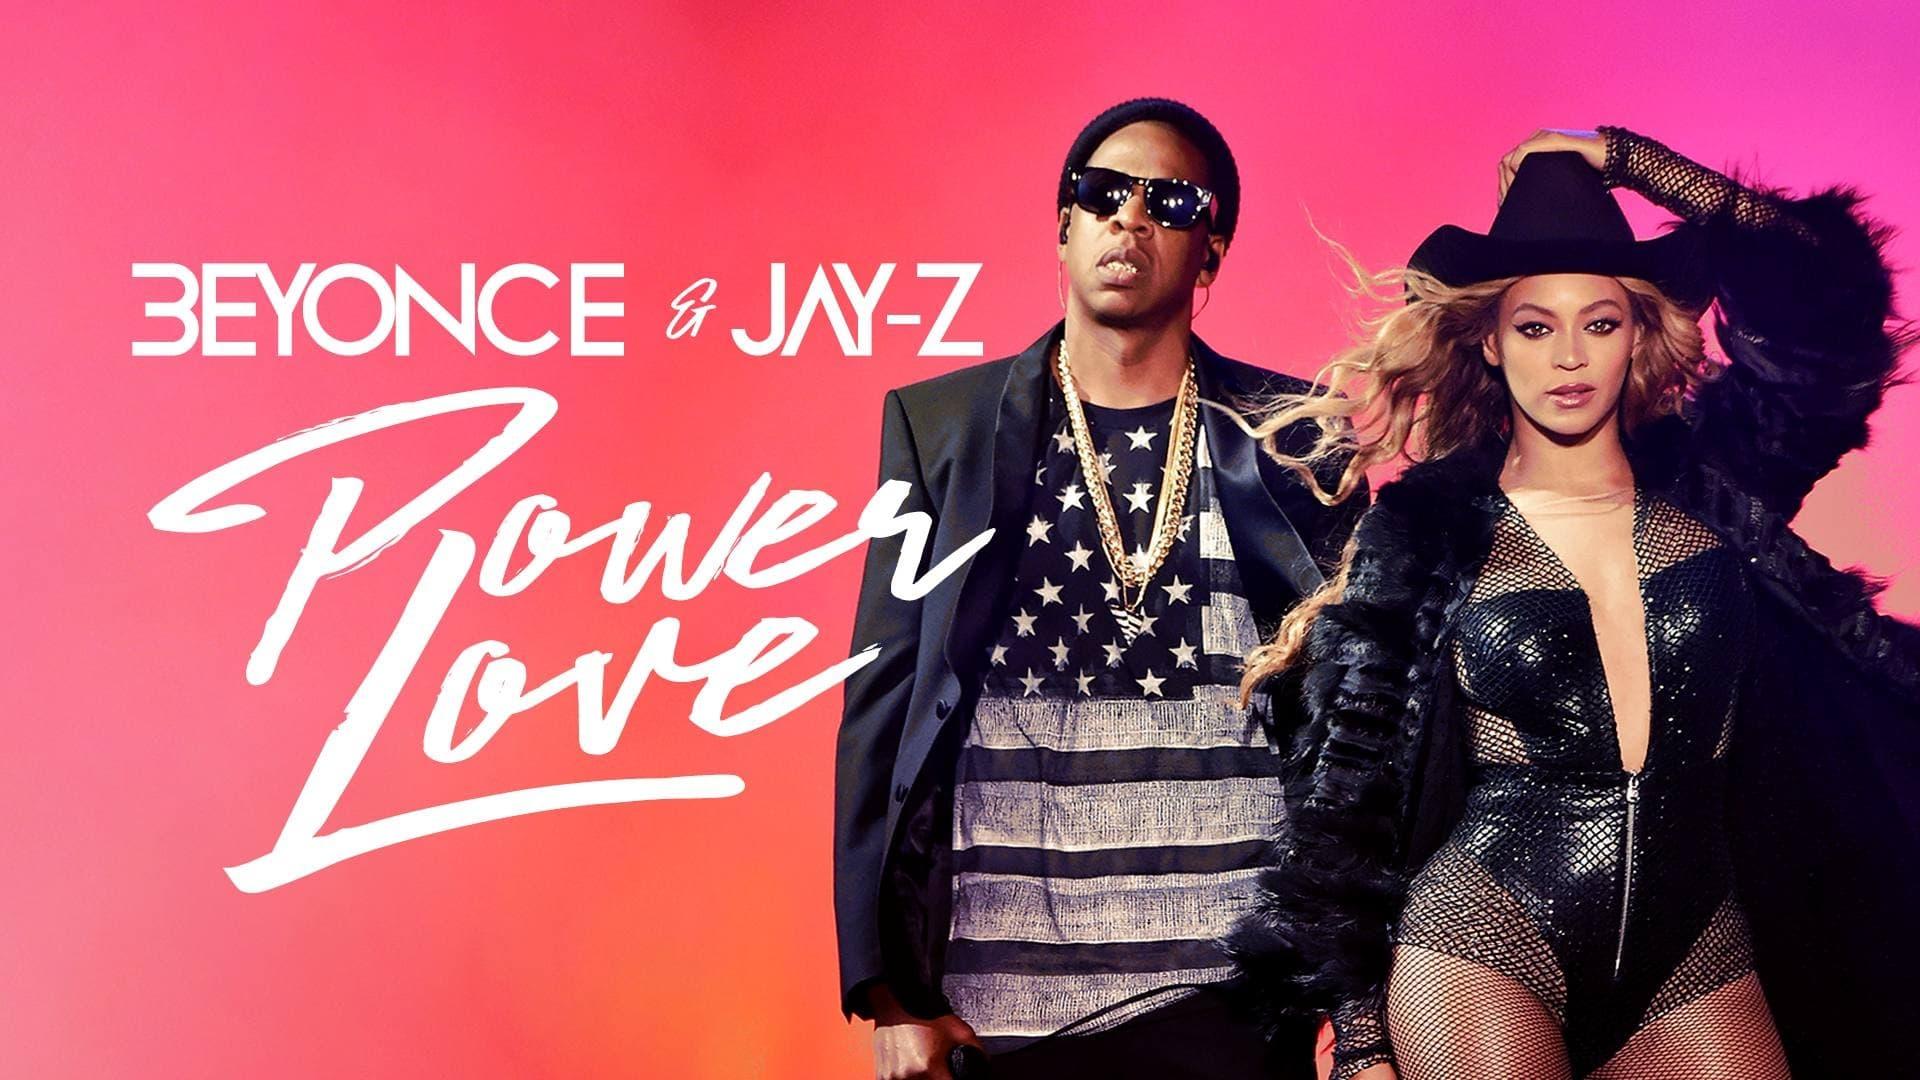 Beyonce & Jay-Z: Power Love backdrop